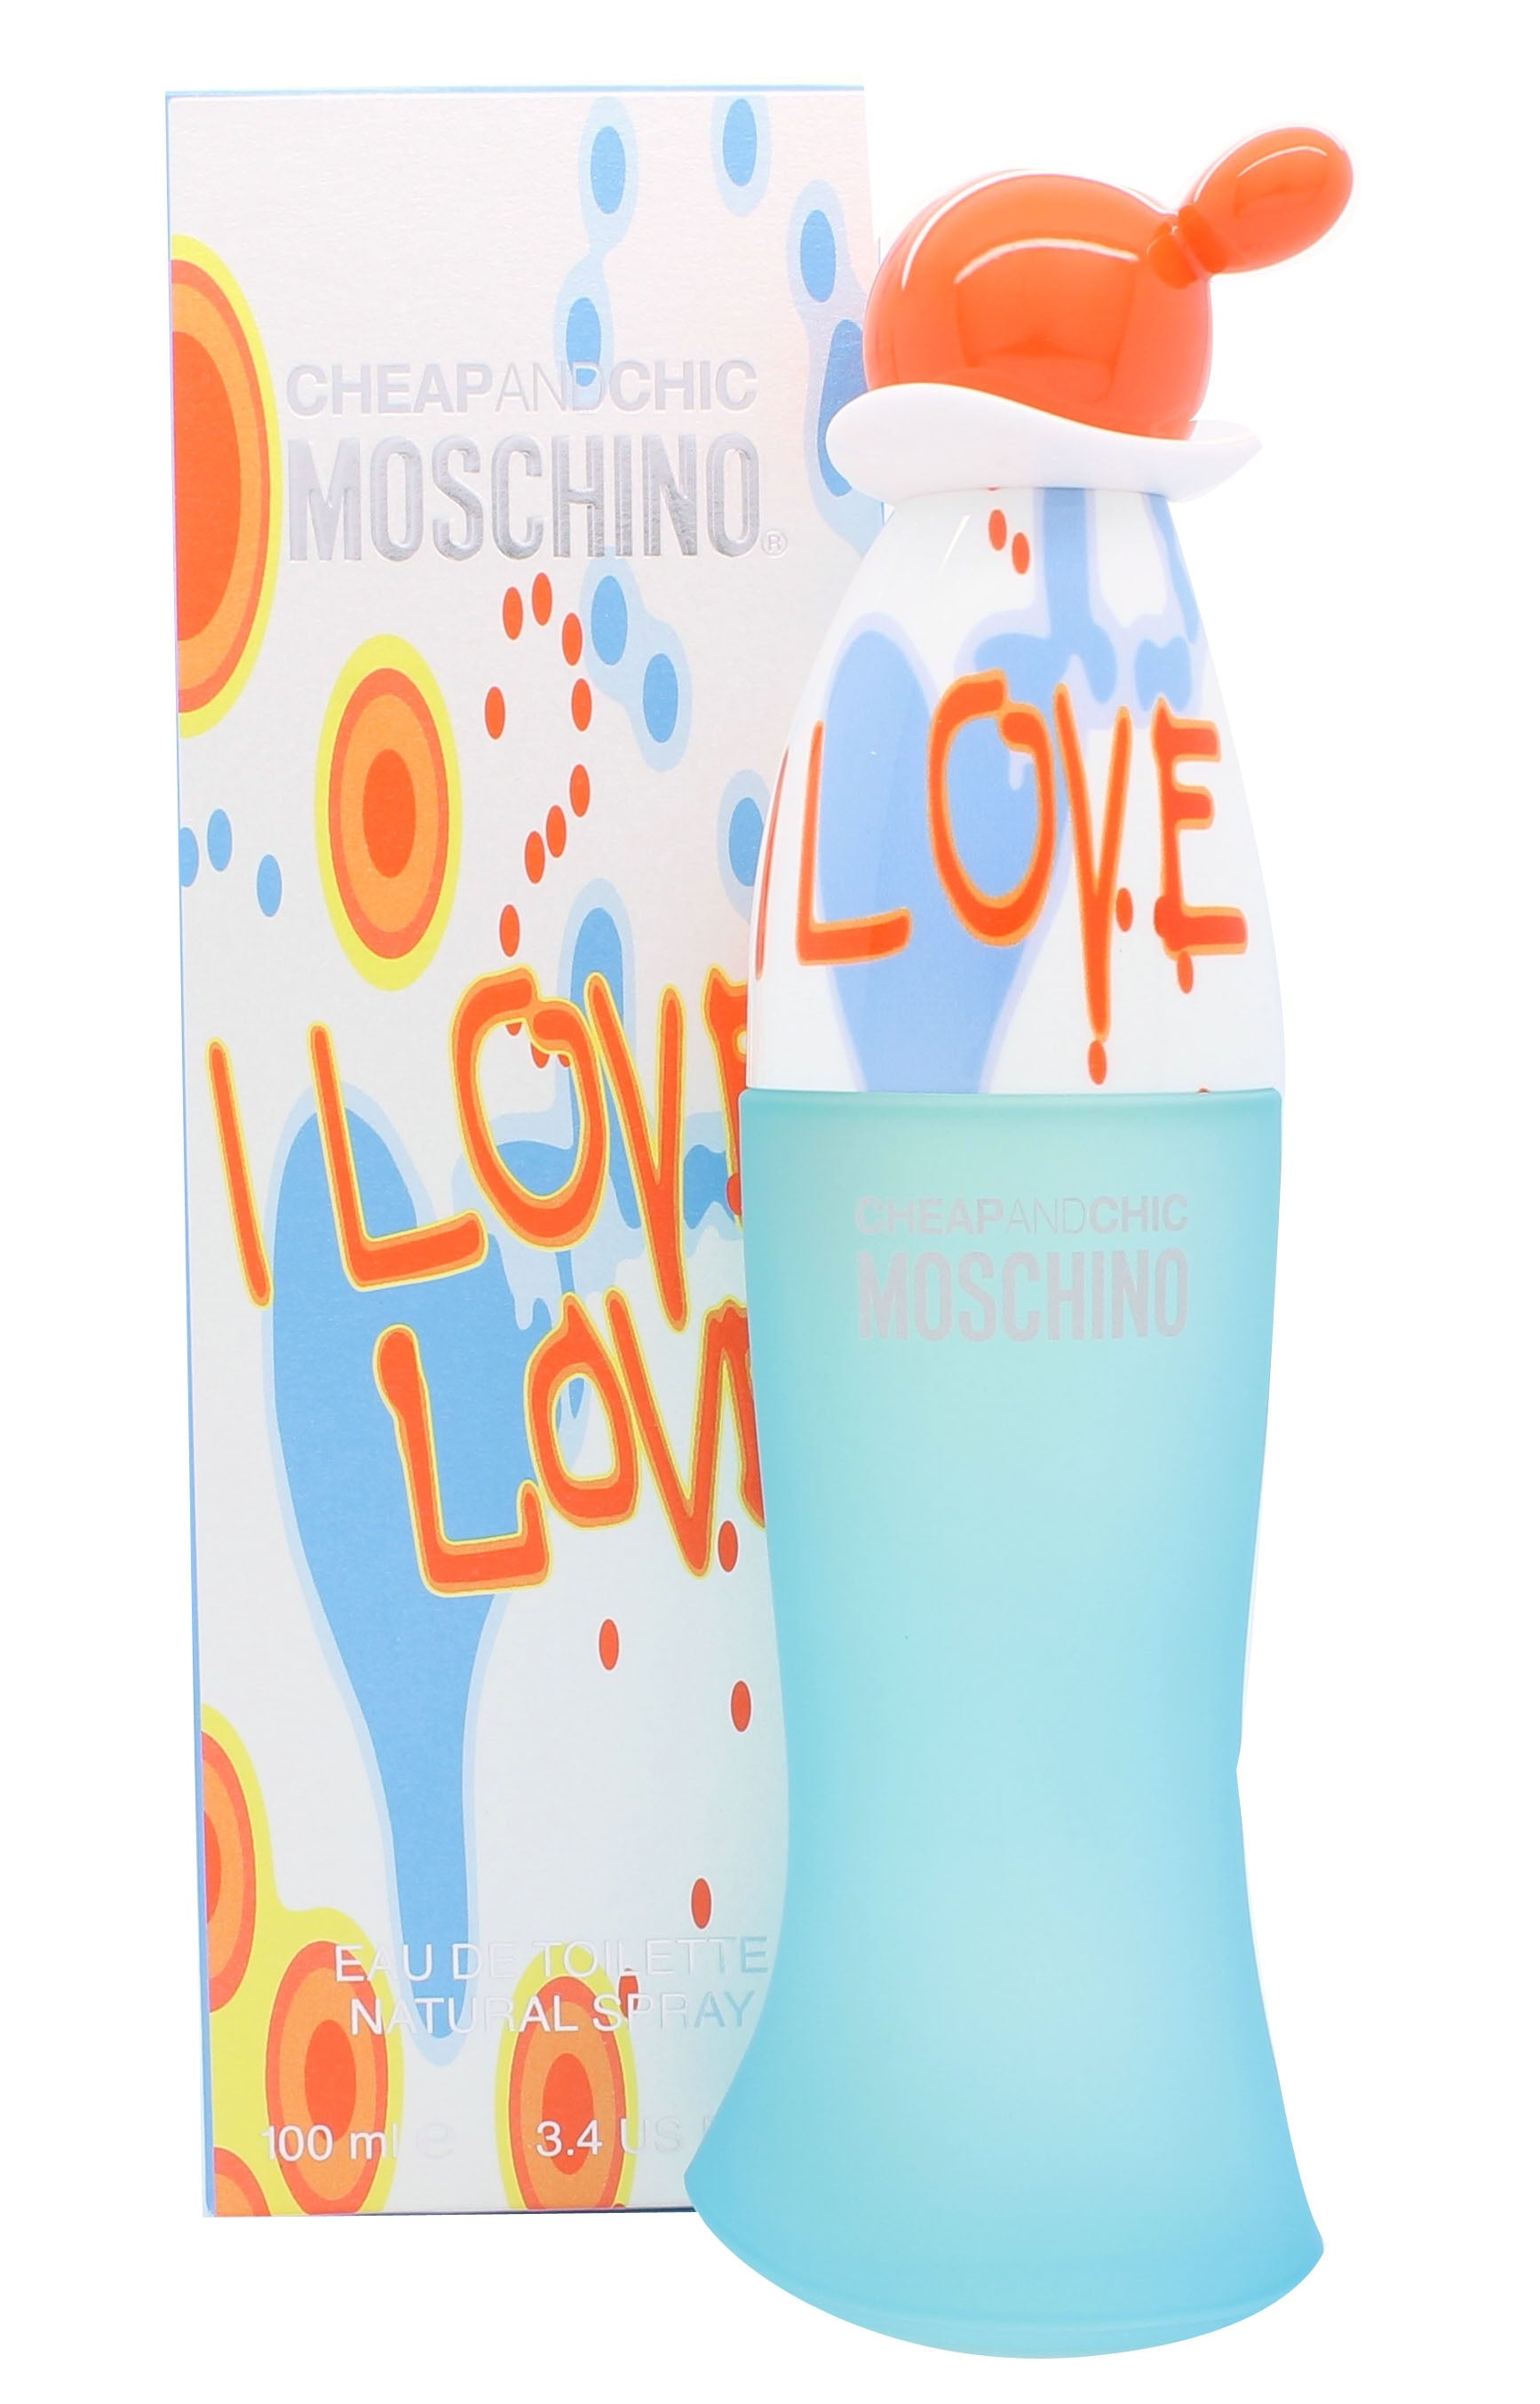 View Moschino Cheap Chic I Love Love Eau de Toilette 100ml Spray information